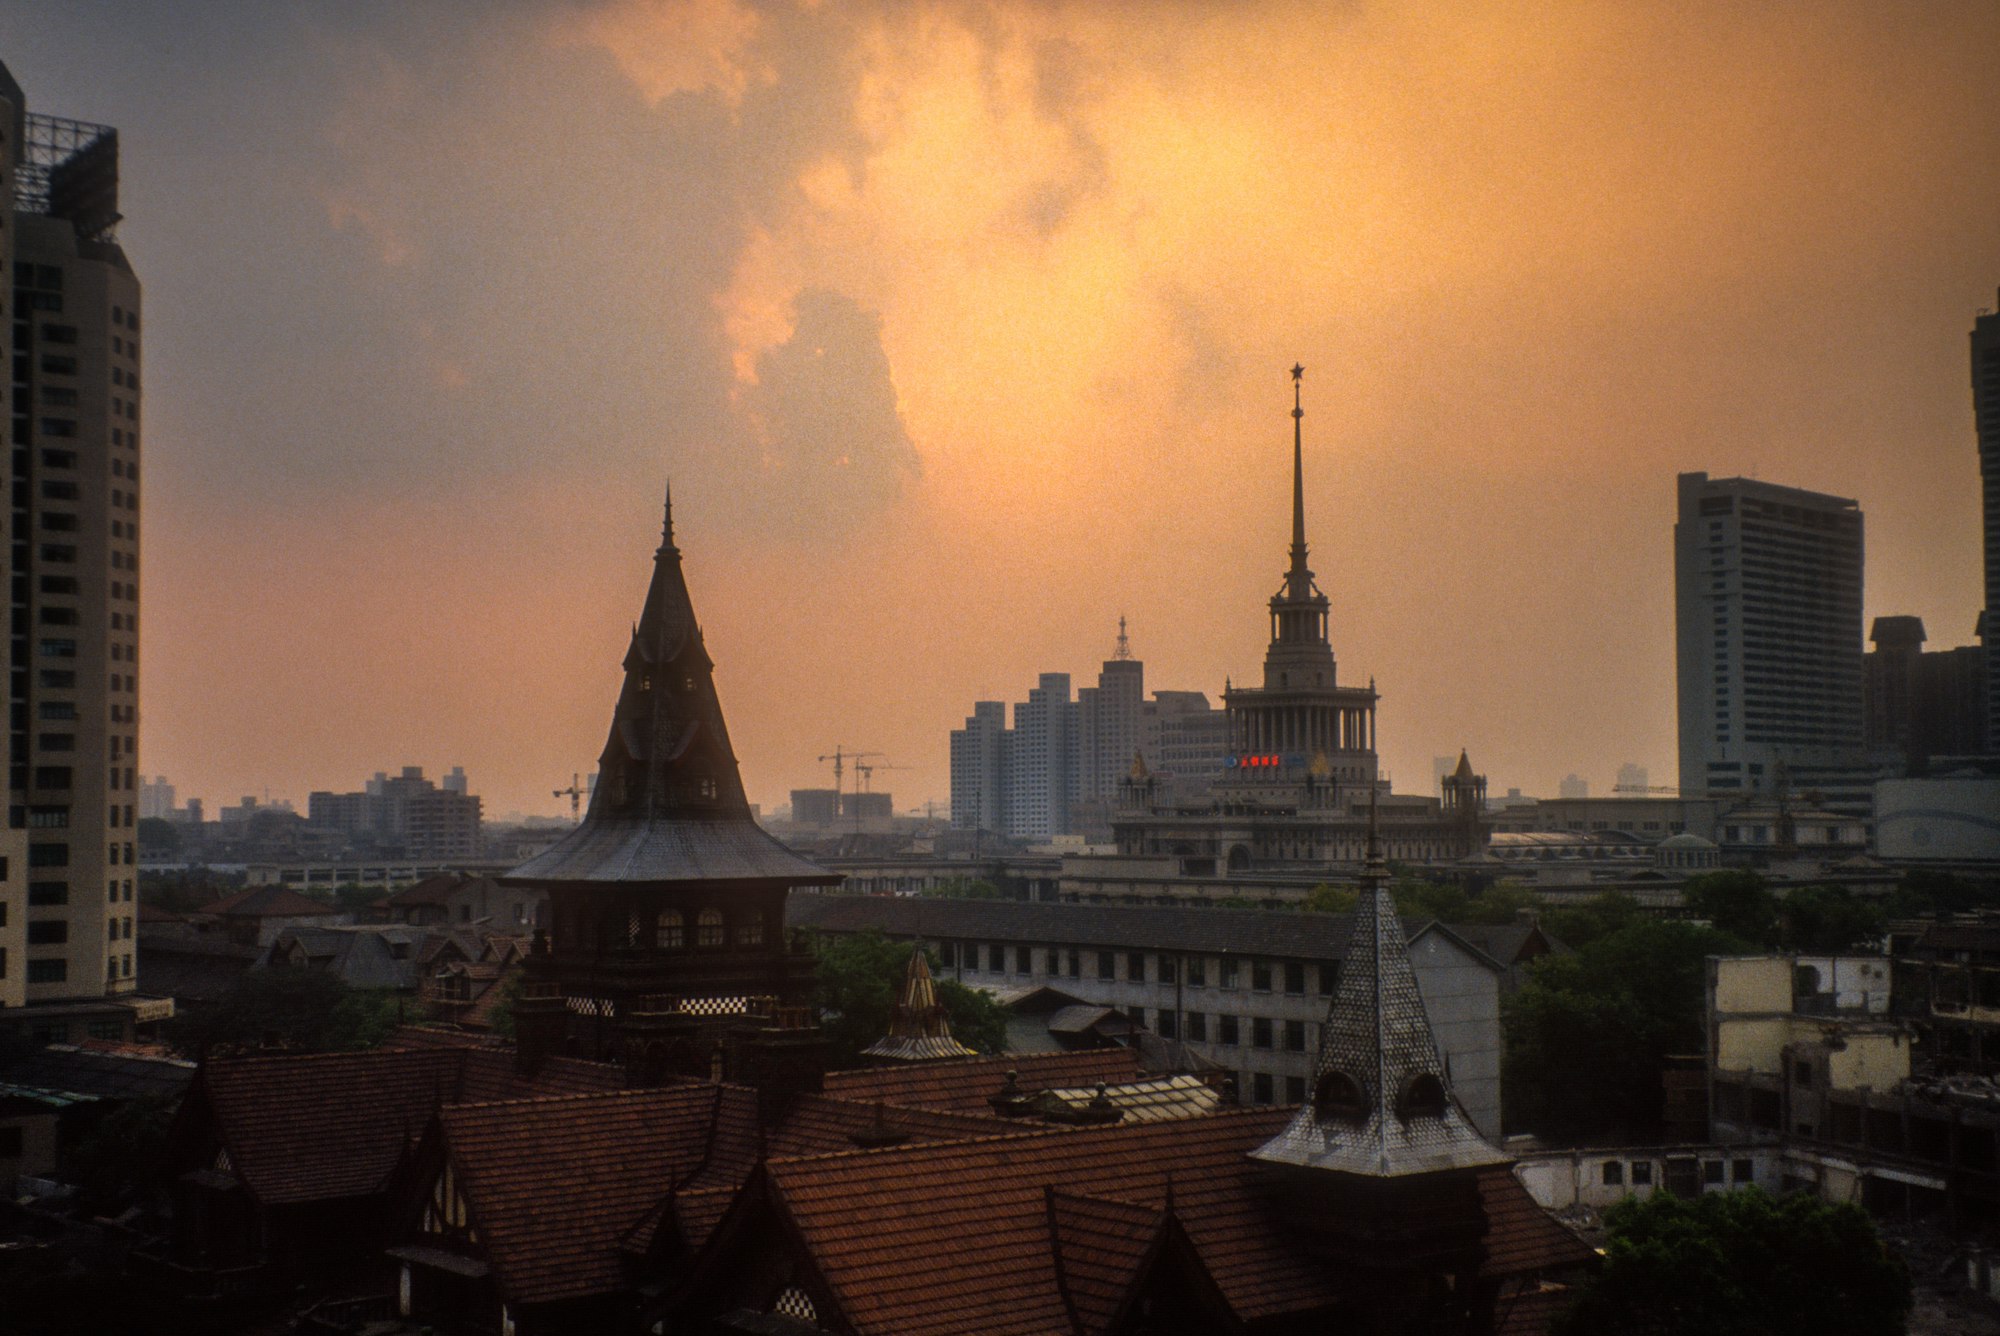 Shanghai late afternoon after a thunderstorm. || shot on slide film, 1992, scanned on Nikon CoolScan 4000.